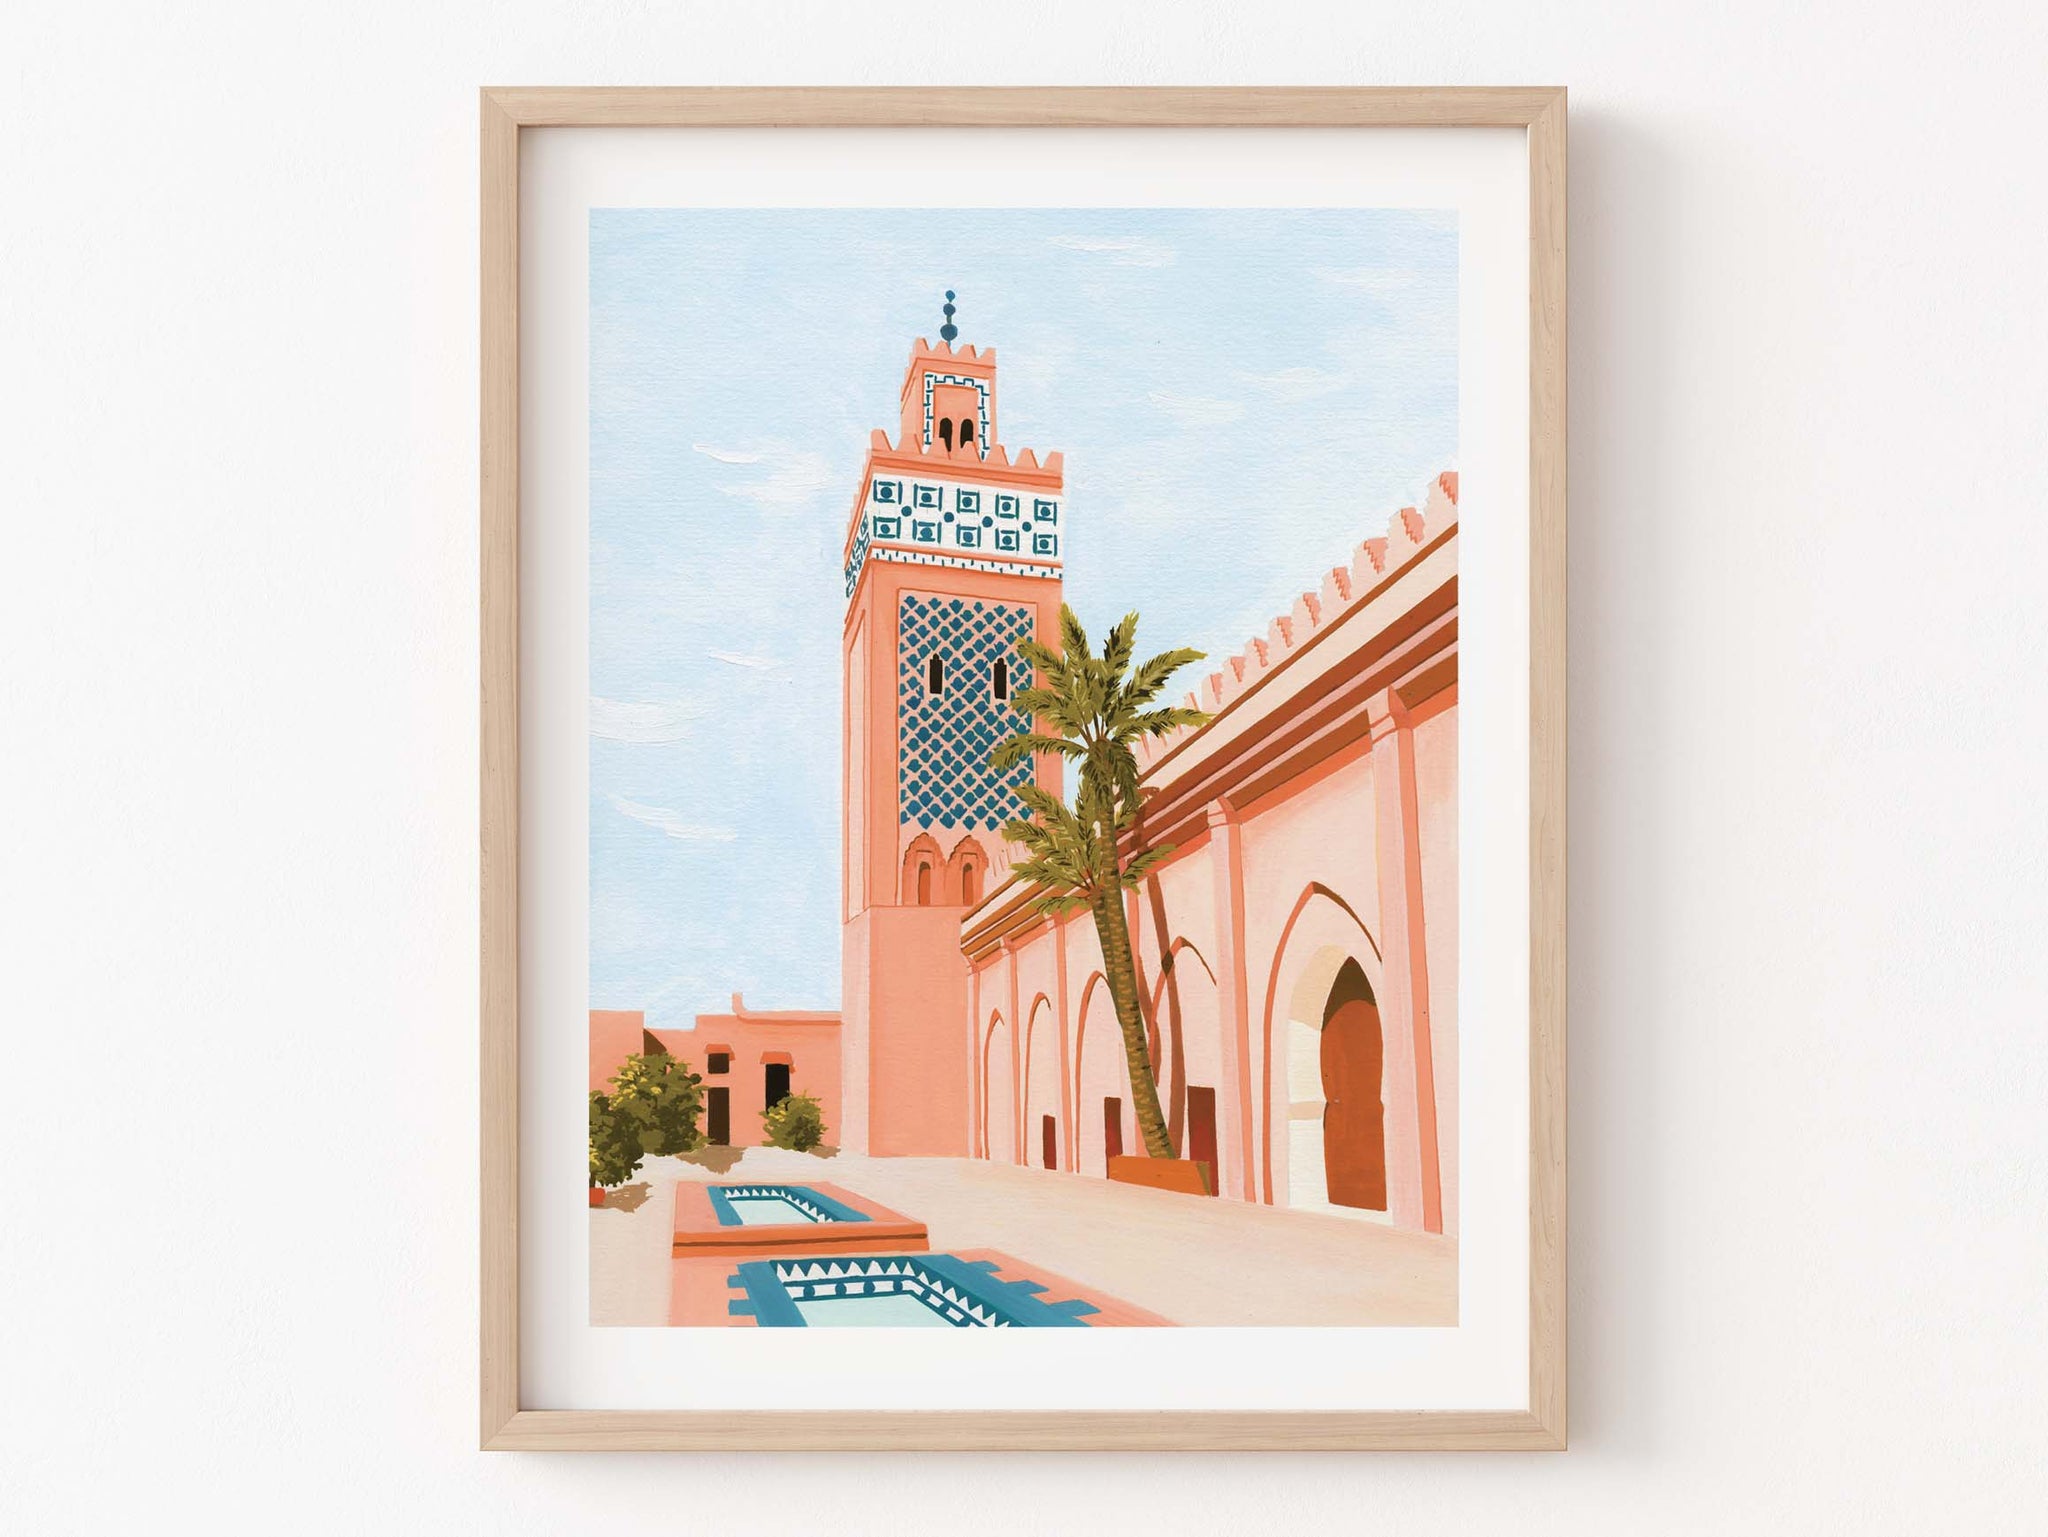 Marrakesh, Morocco - Art Print